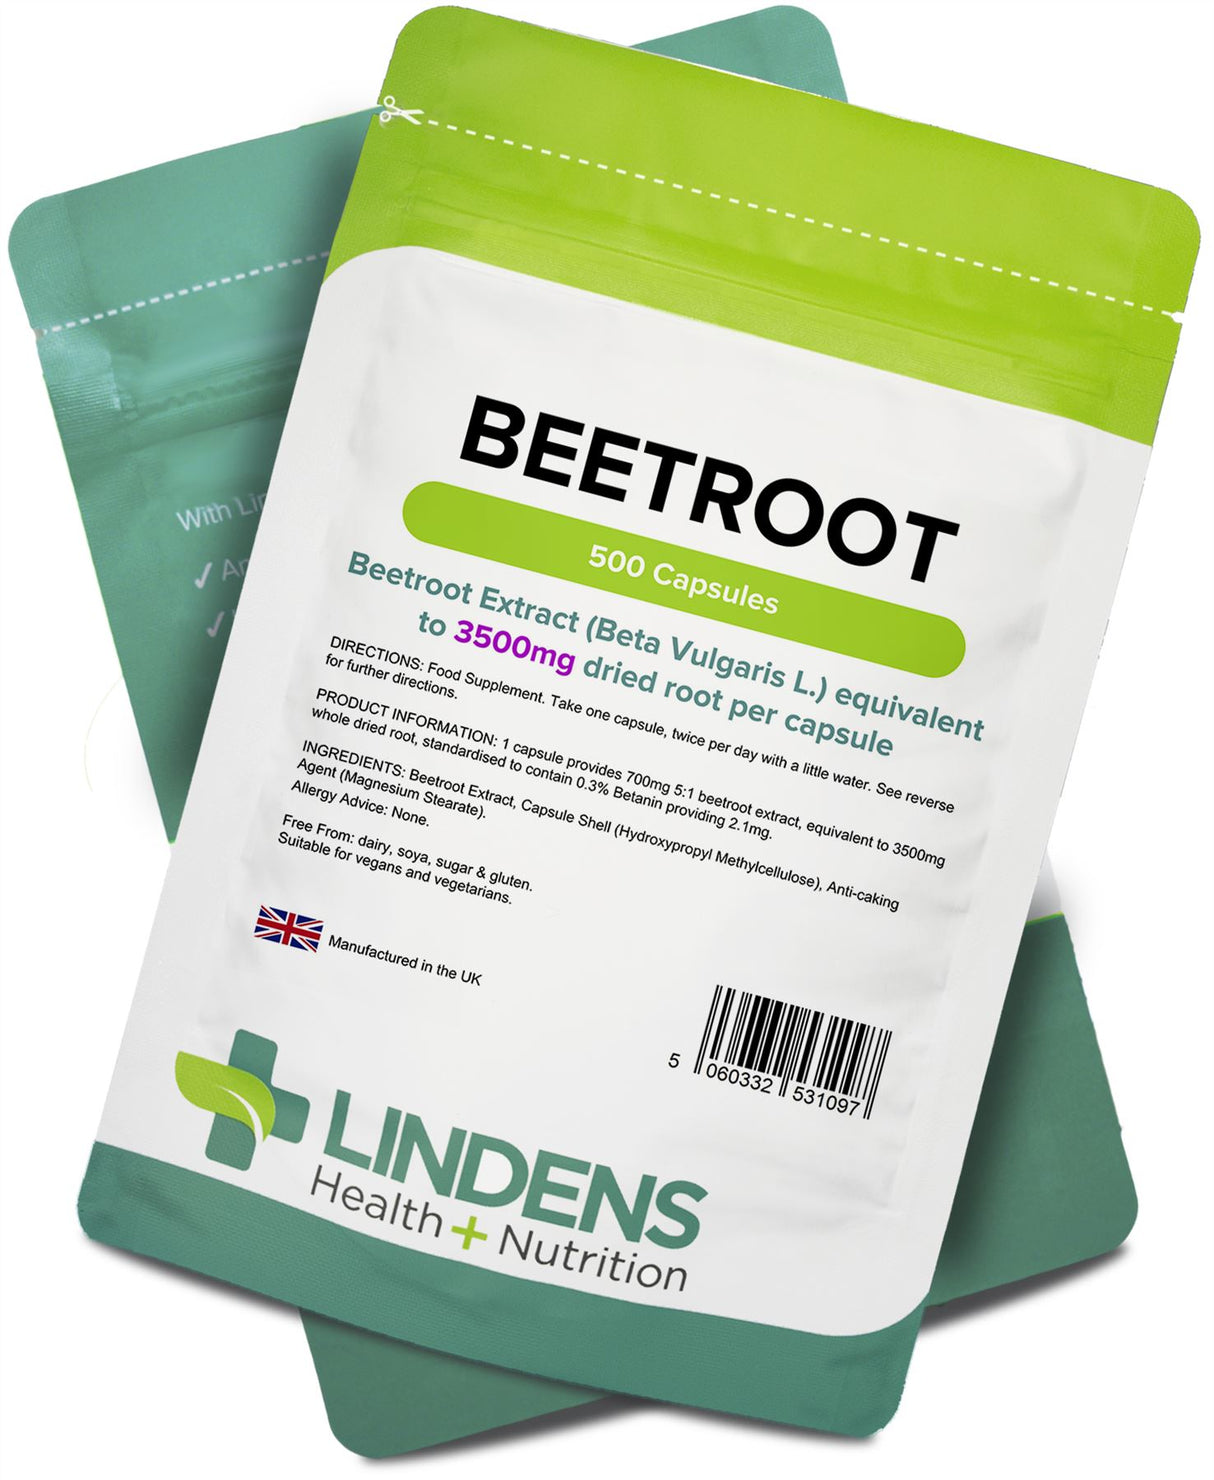 Lindens Beetroot 3500mg - 500 Capsules